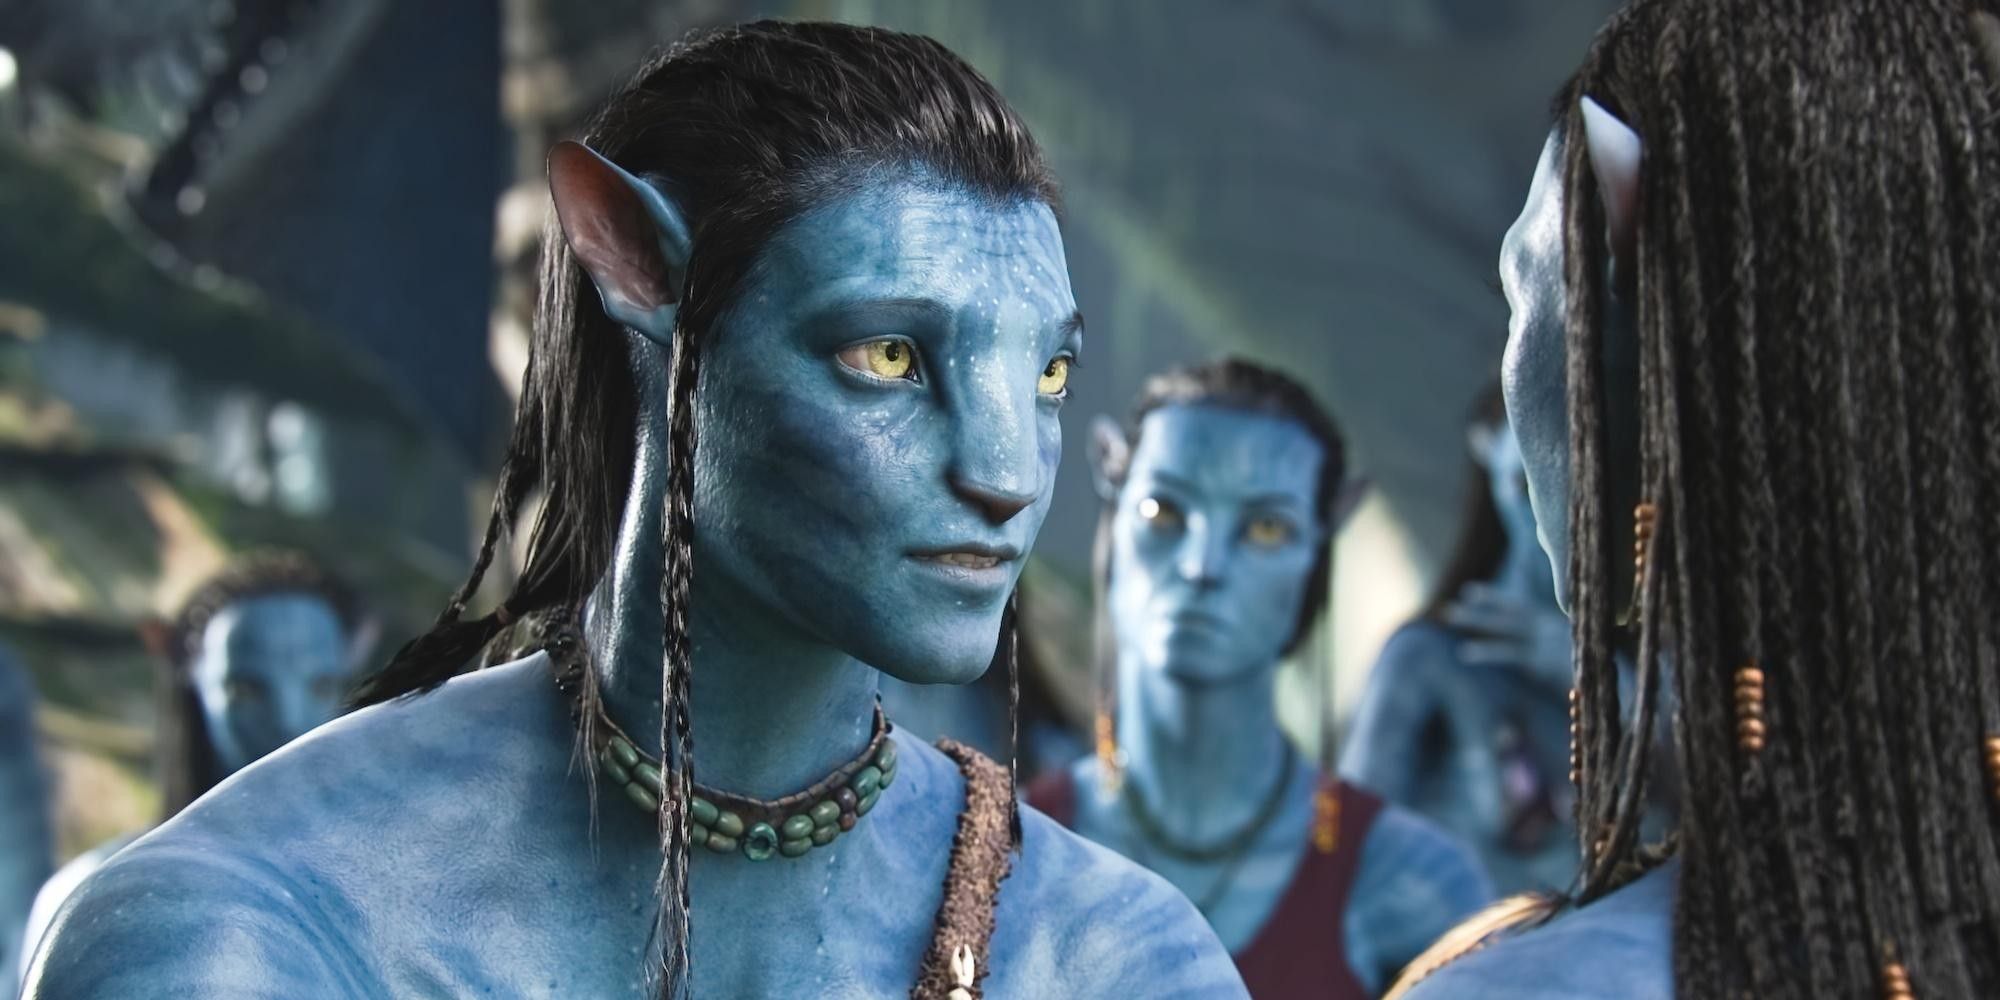 Sam Worthington as Jake Sully in Avatar